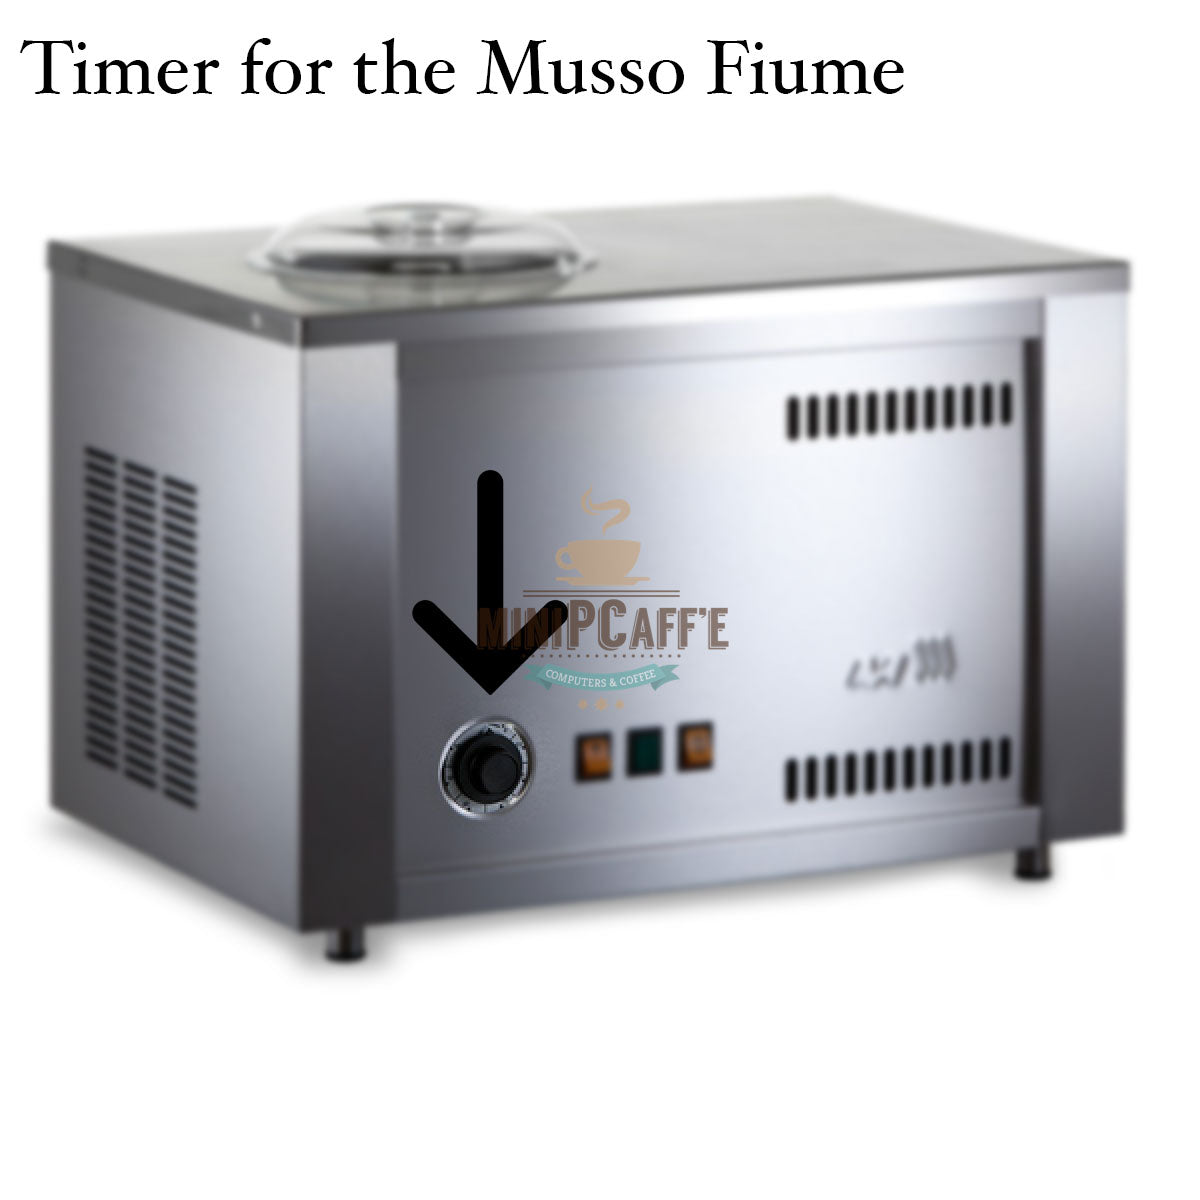 Timer for Musso Fiume Giardino Ice Cream Machine